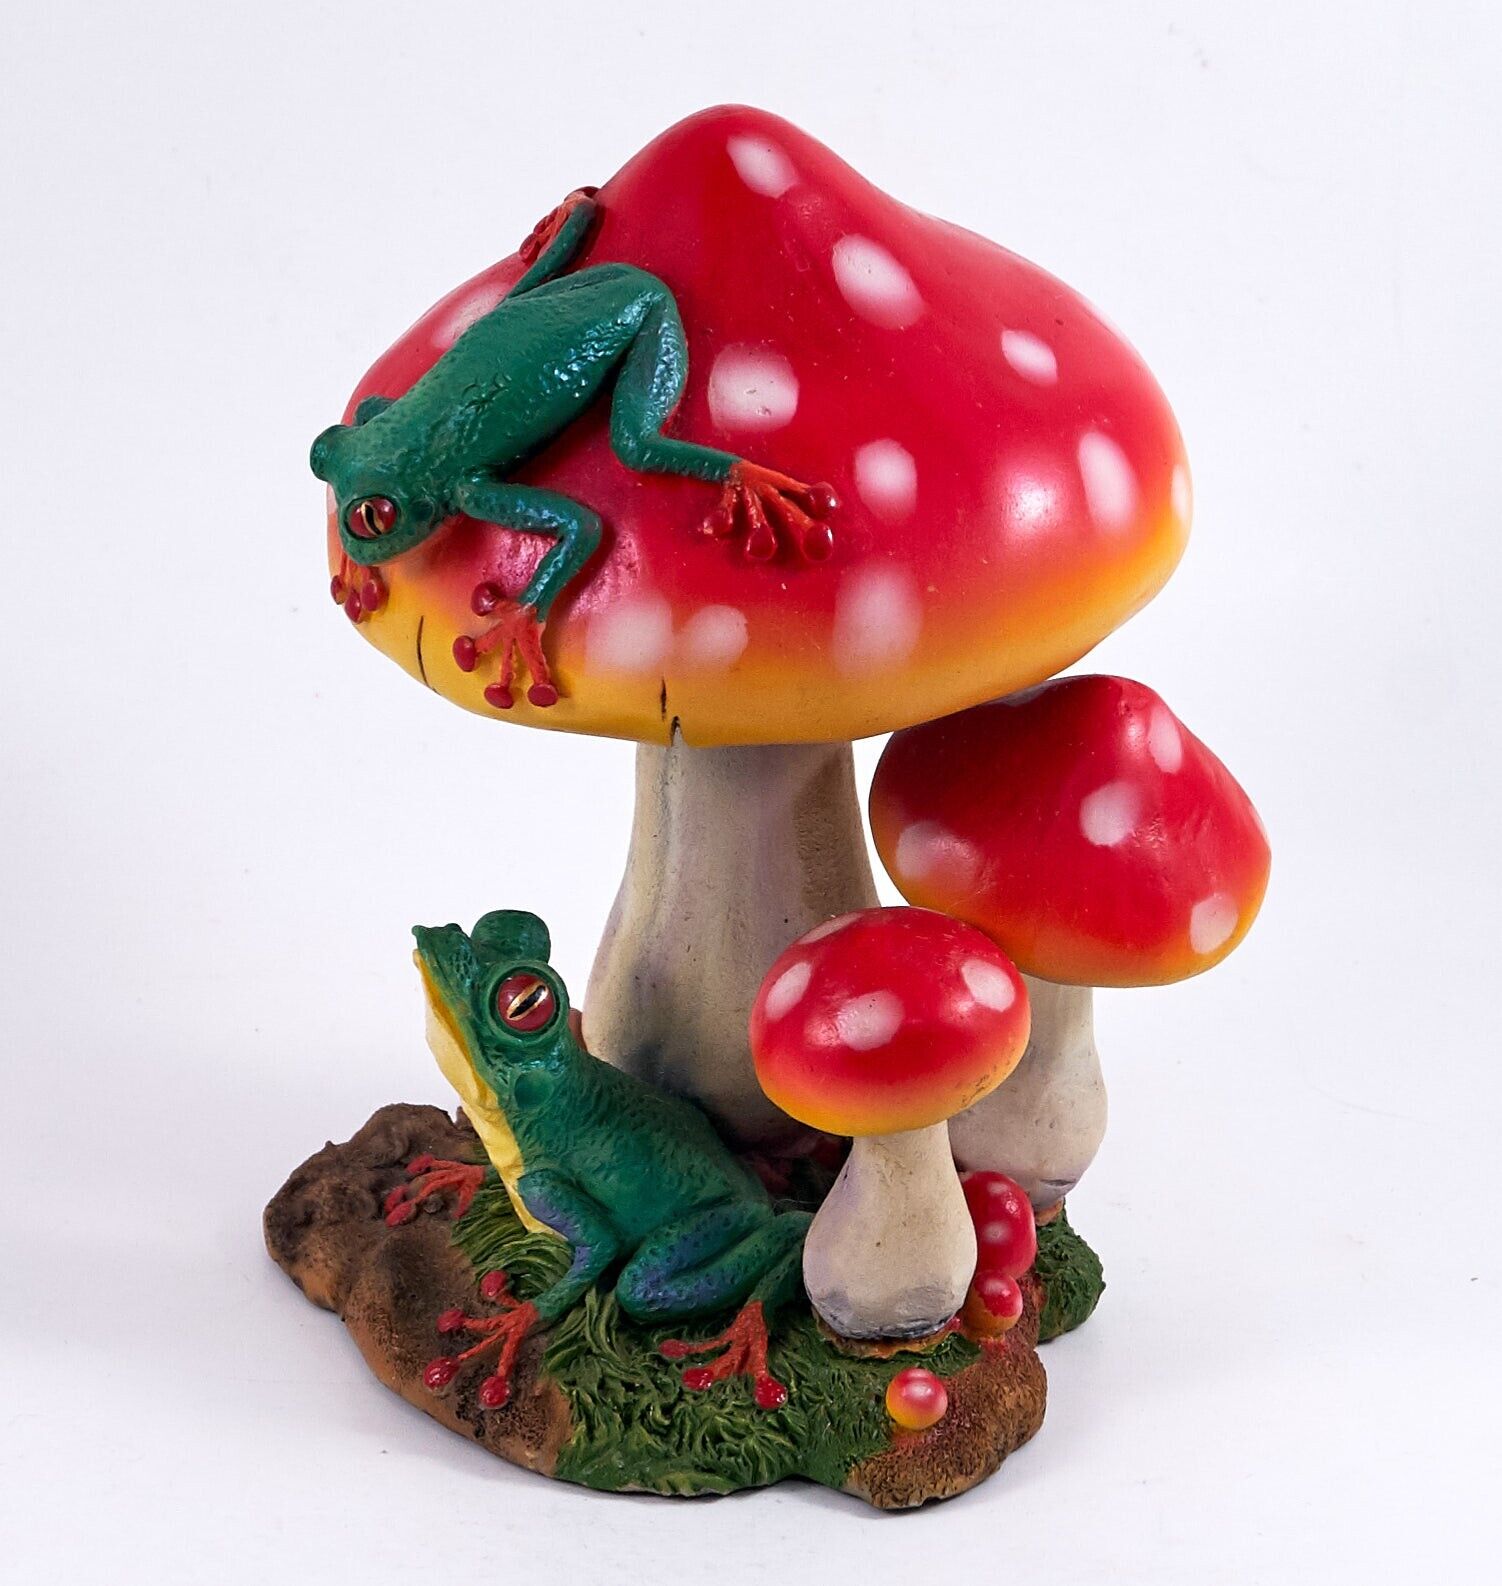 Greations Frog & Mushroom Figurine With 3 Red Mushrooms 2 Tree Frogs Resin 2002